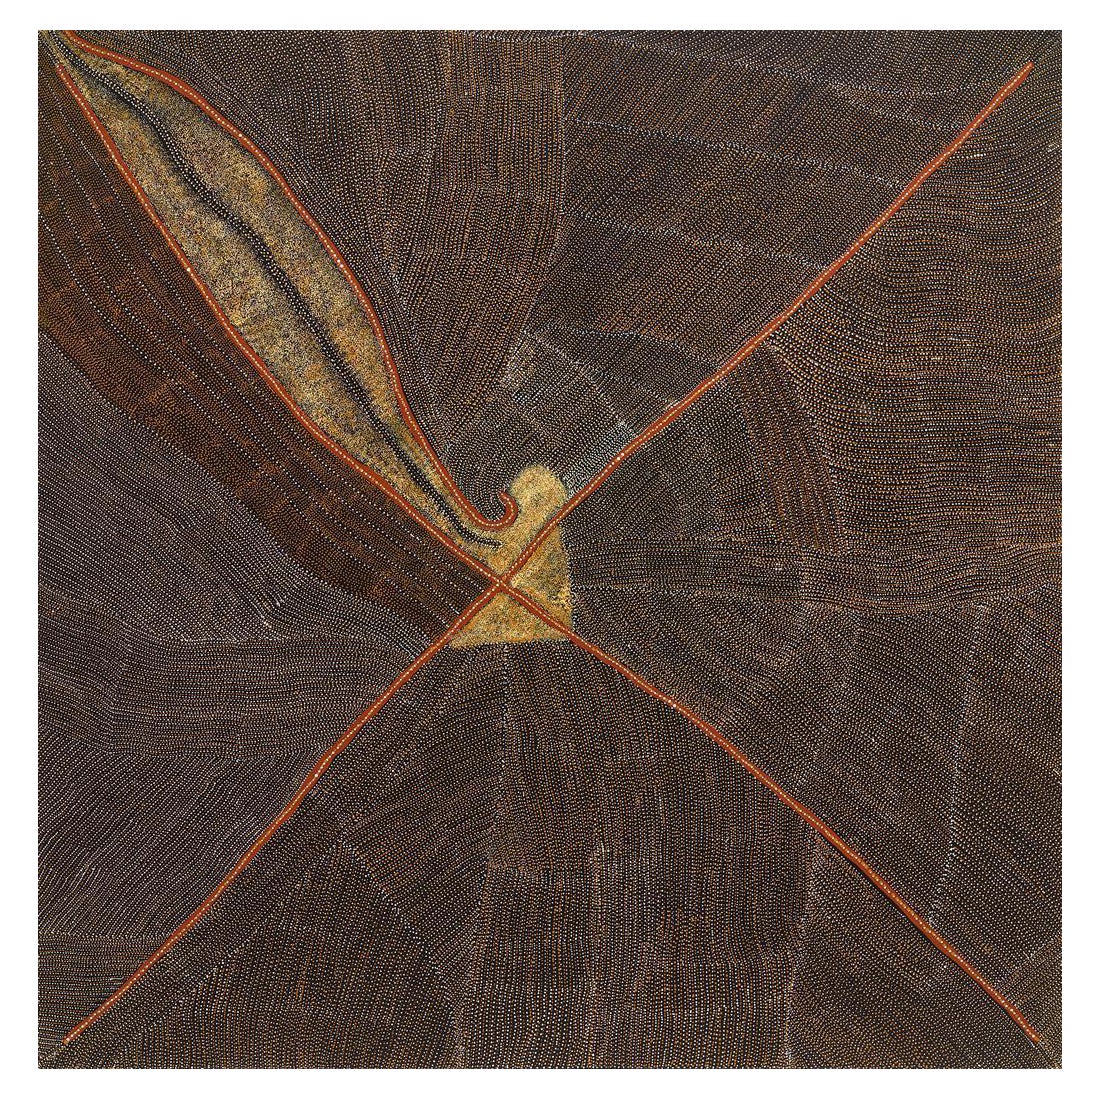 Rare Large Australian Aboriginal Painting by Kathleen Petyarre